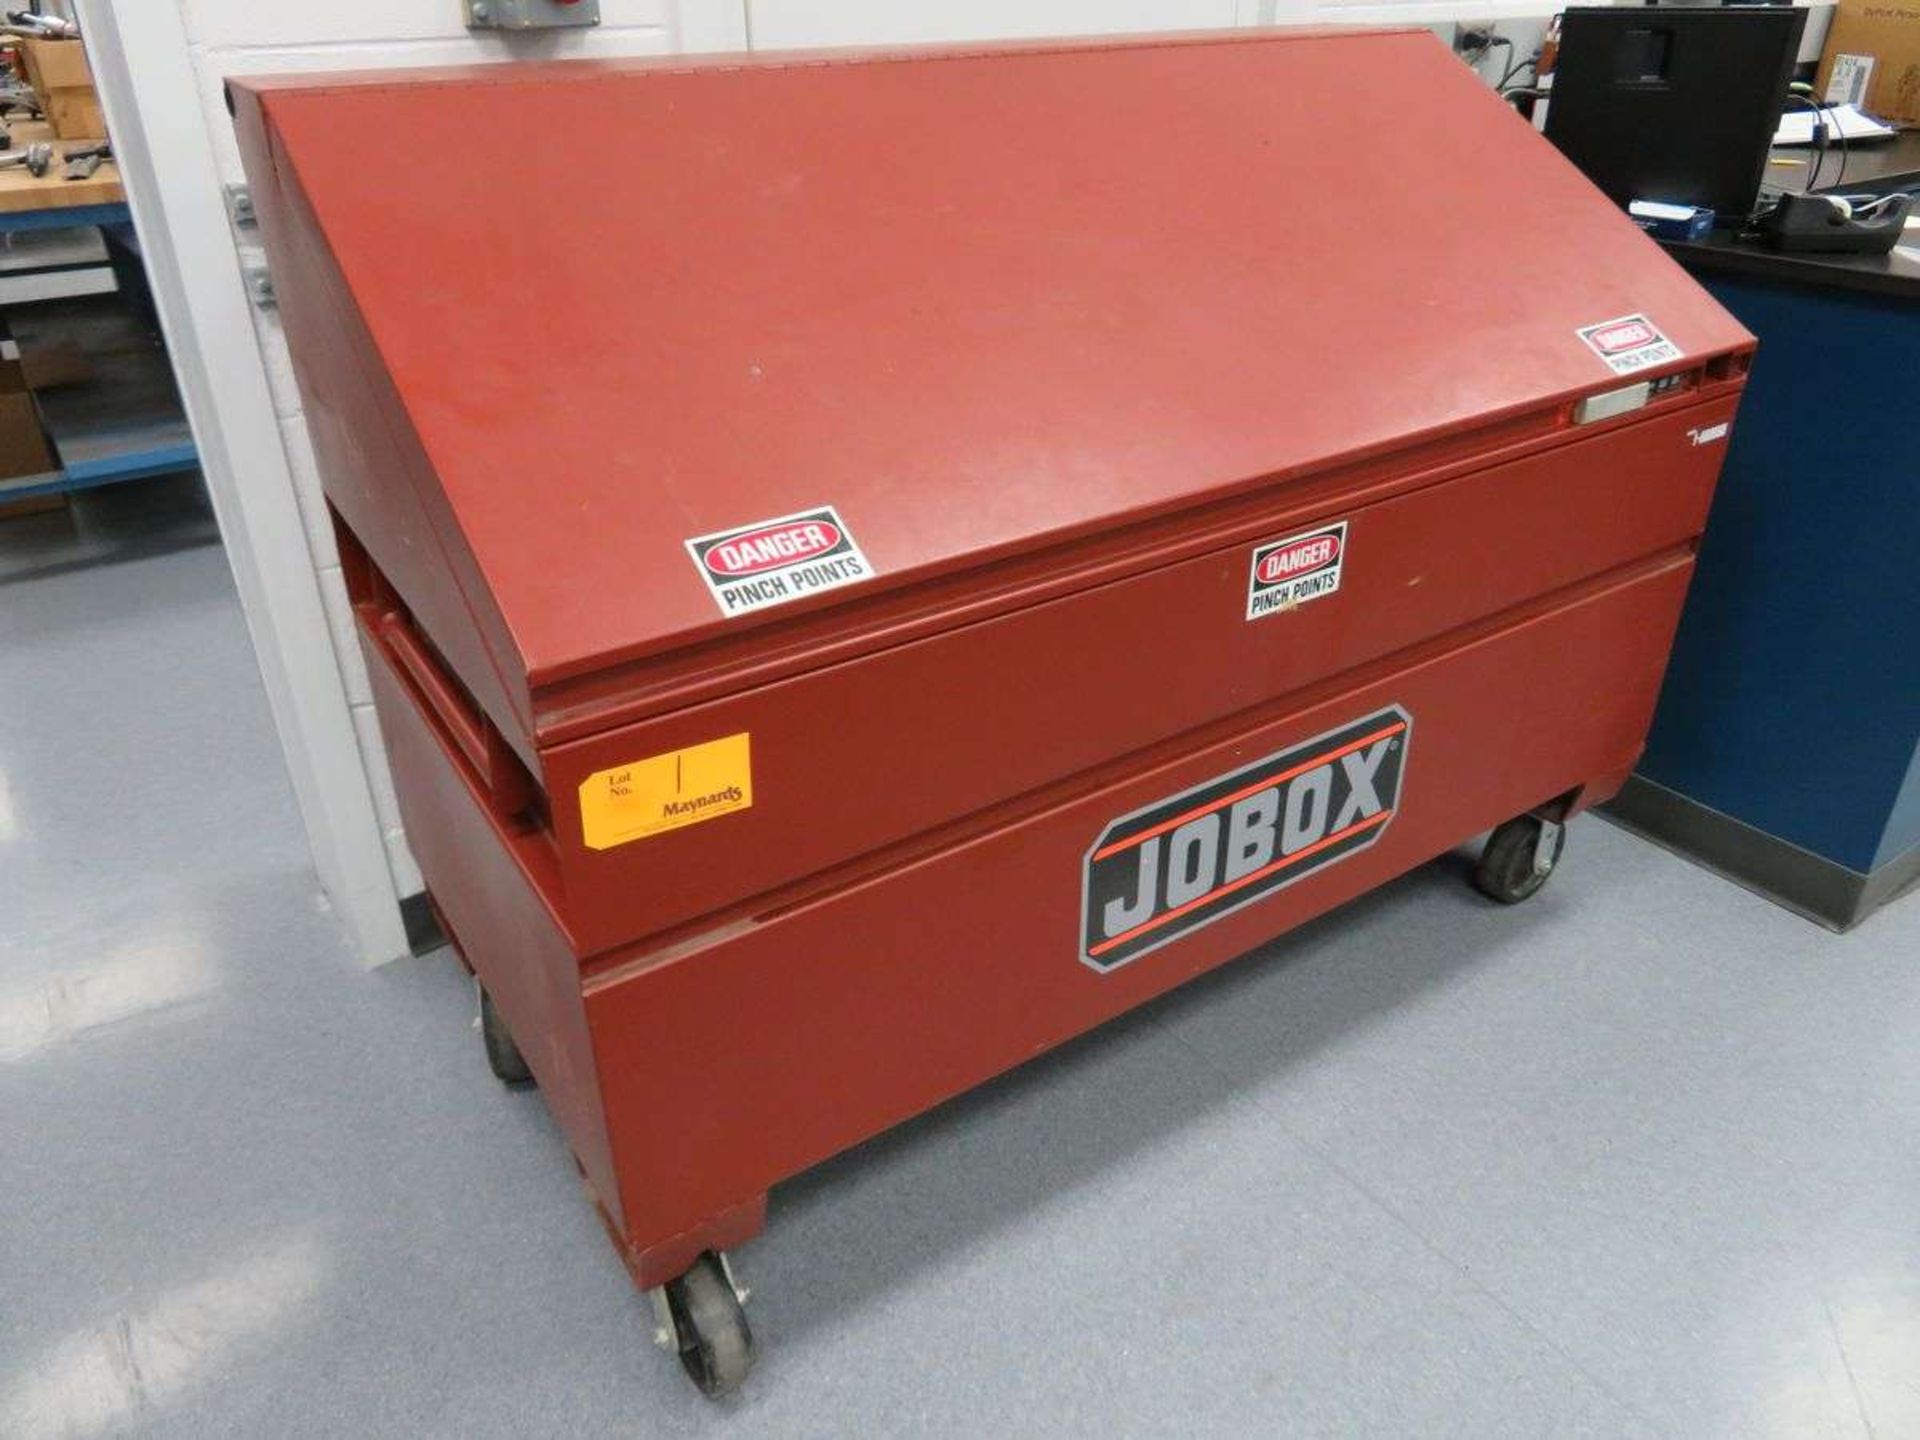 Jobox 1-680990 Slant Top Rolling Tool Chest